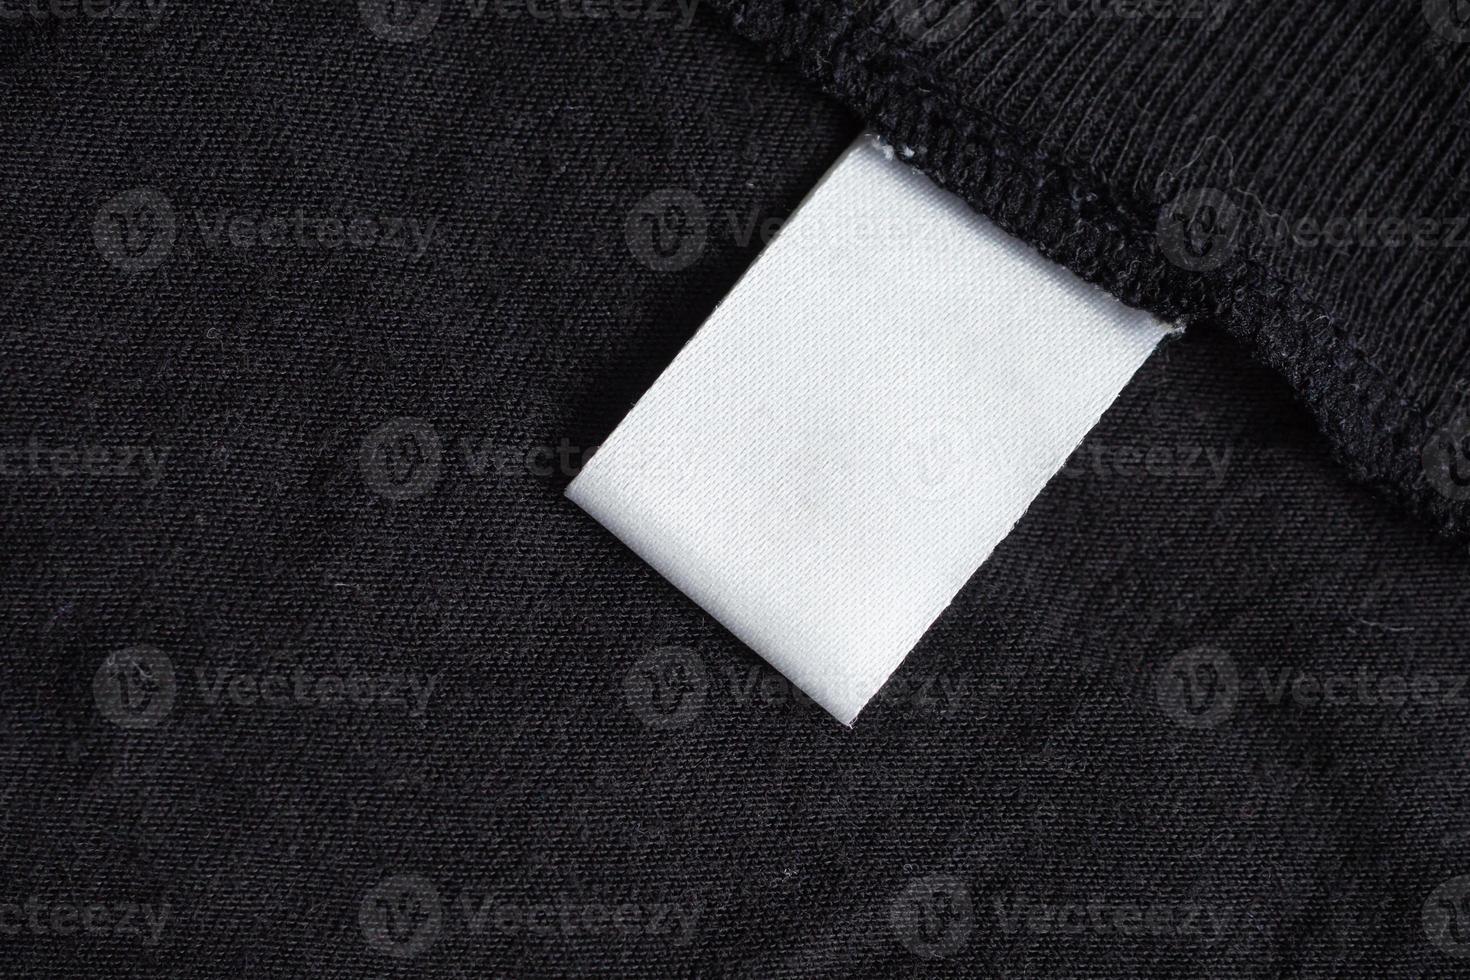 Blank white laundry care clothing label on black fabric texture photo